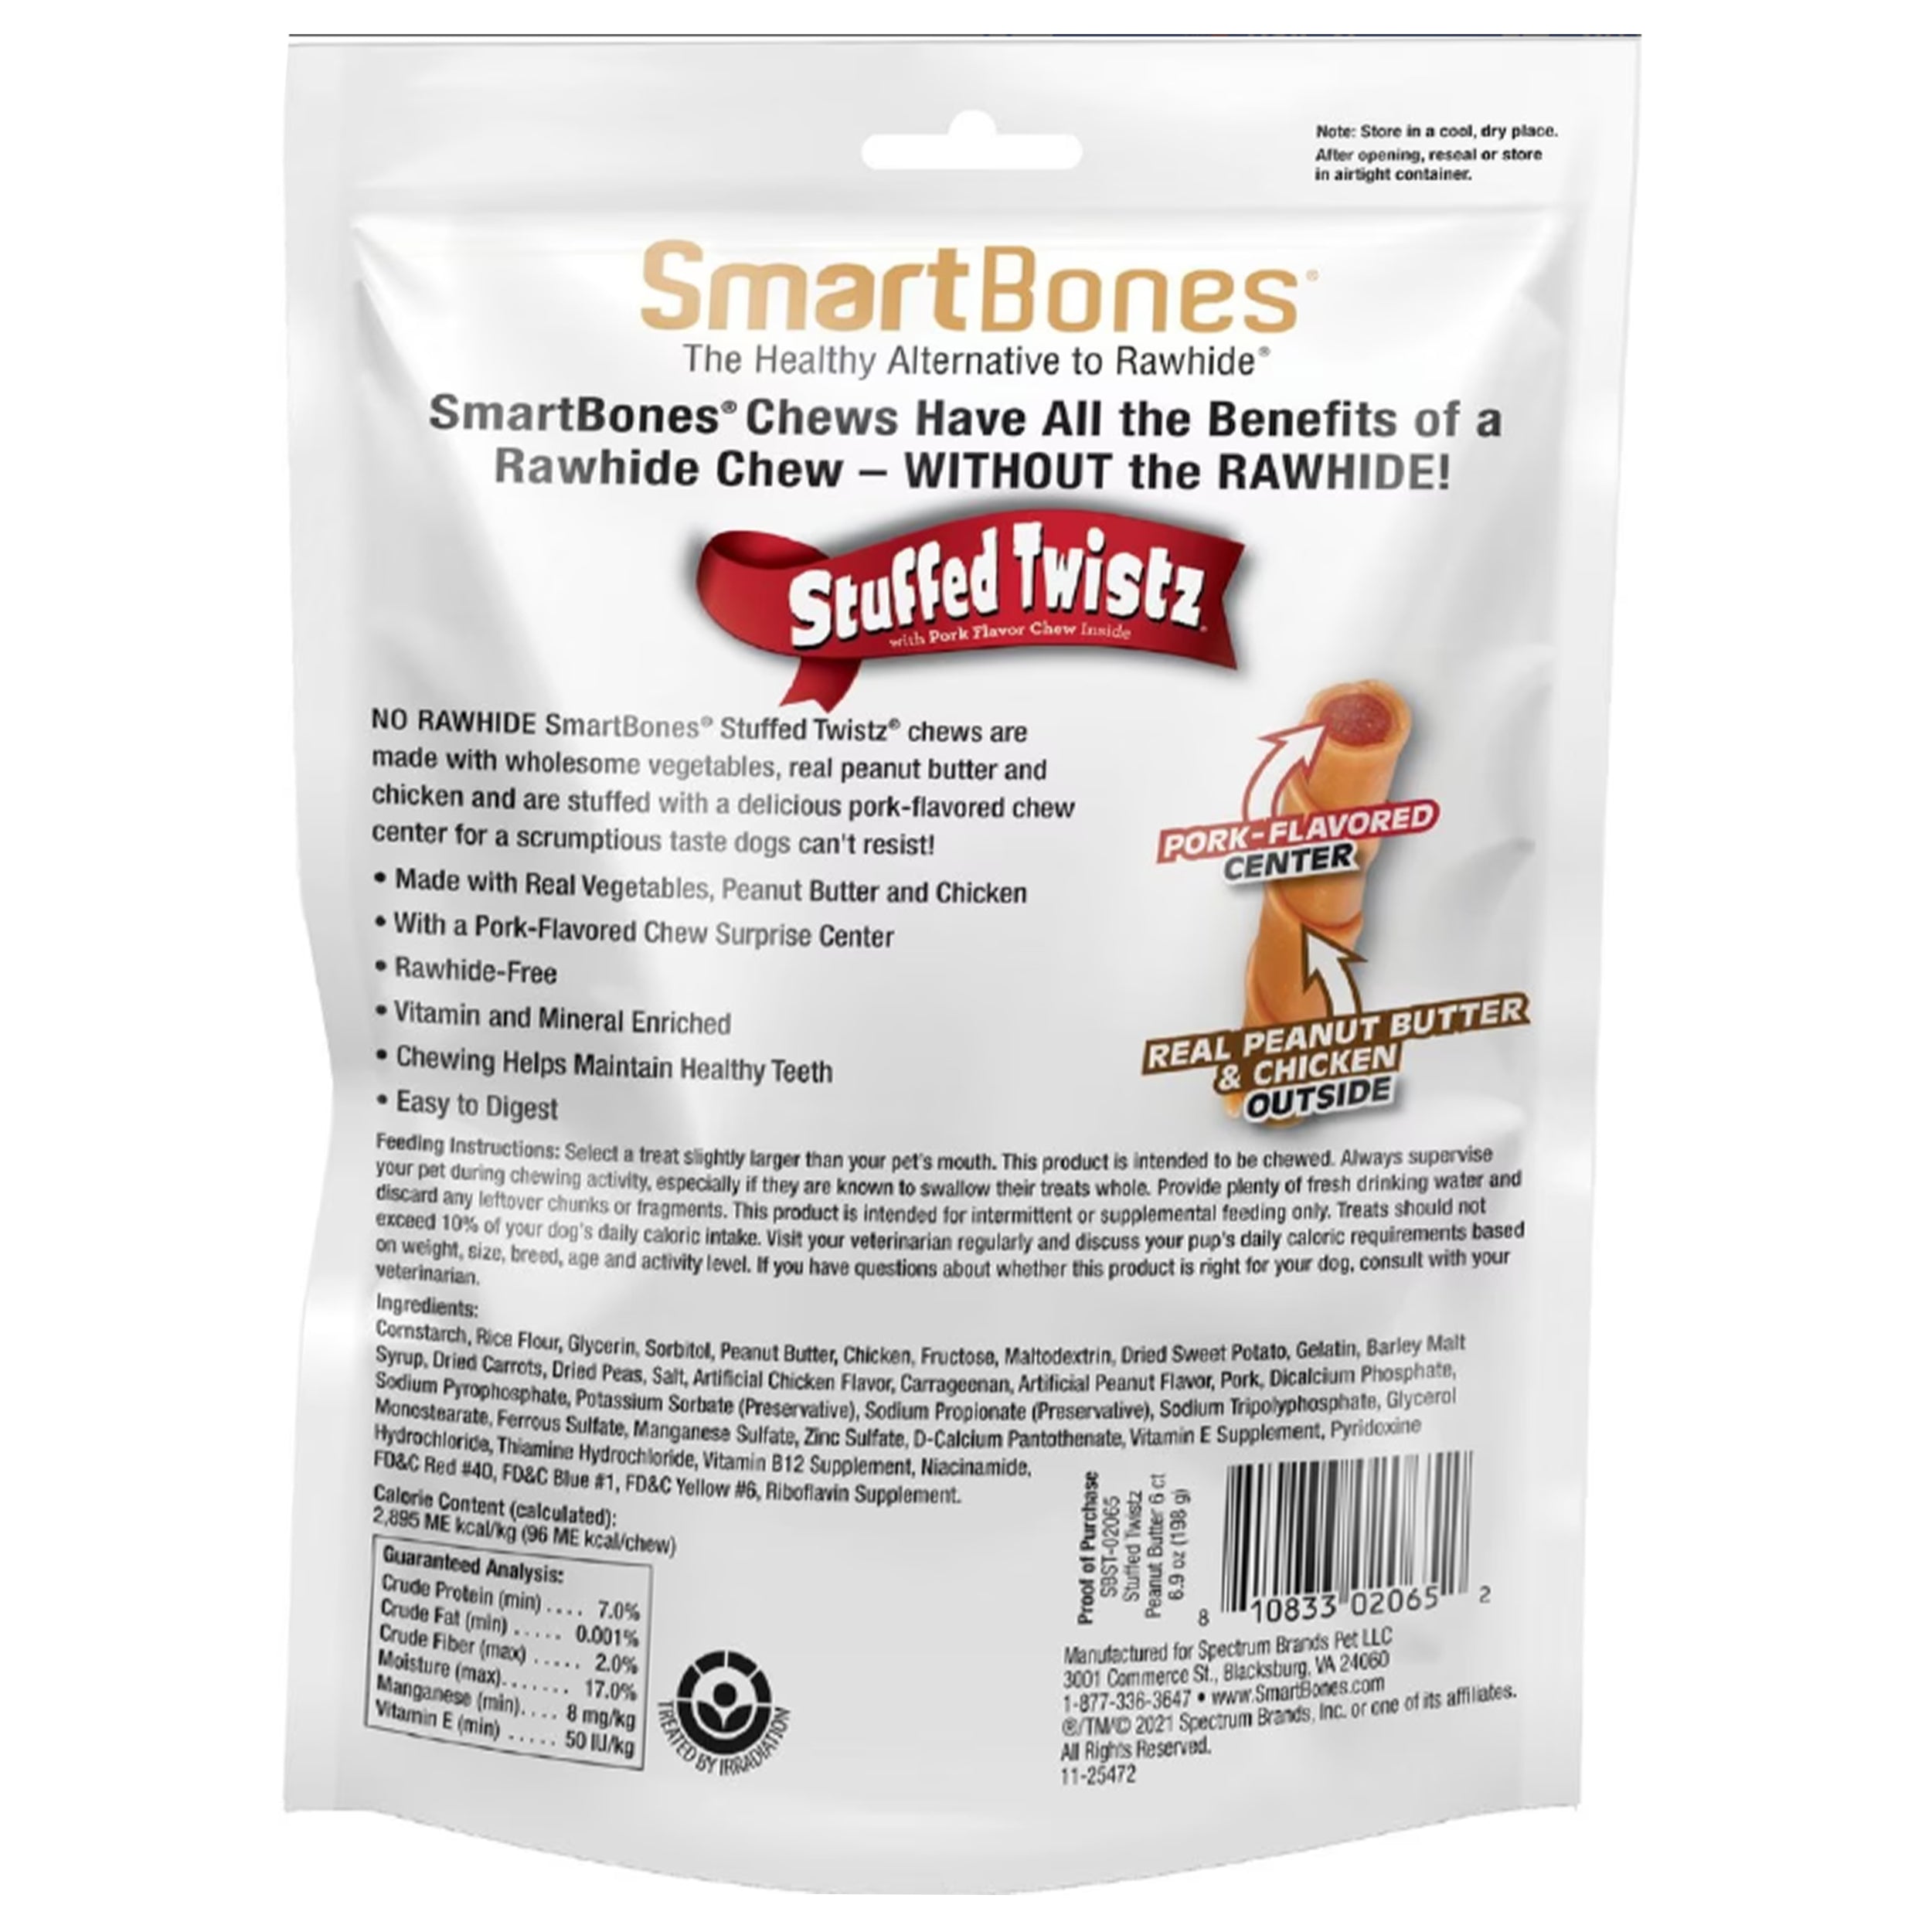 SmartBones Stuffed Twistz Peanut Butter Chews Dog Treats, 6 Count